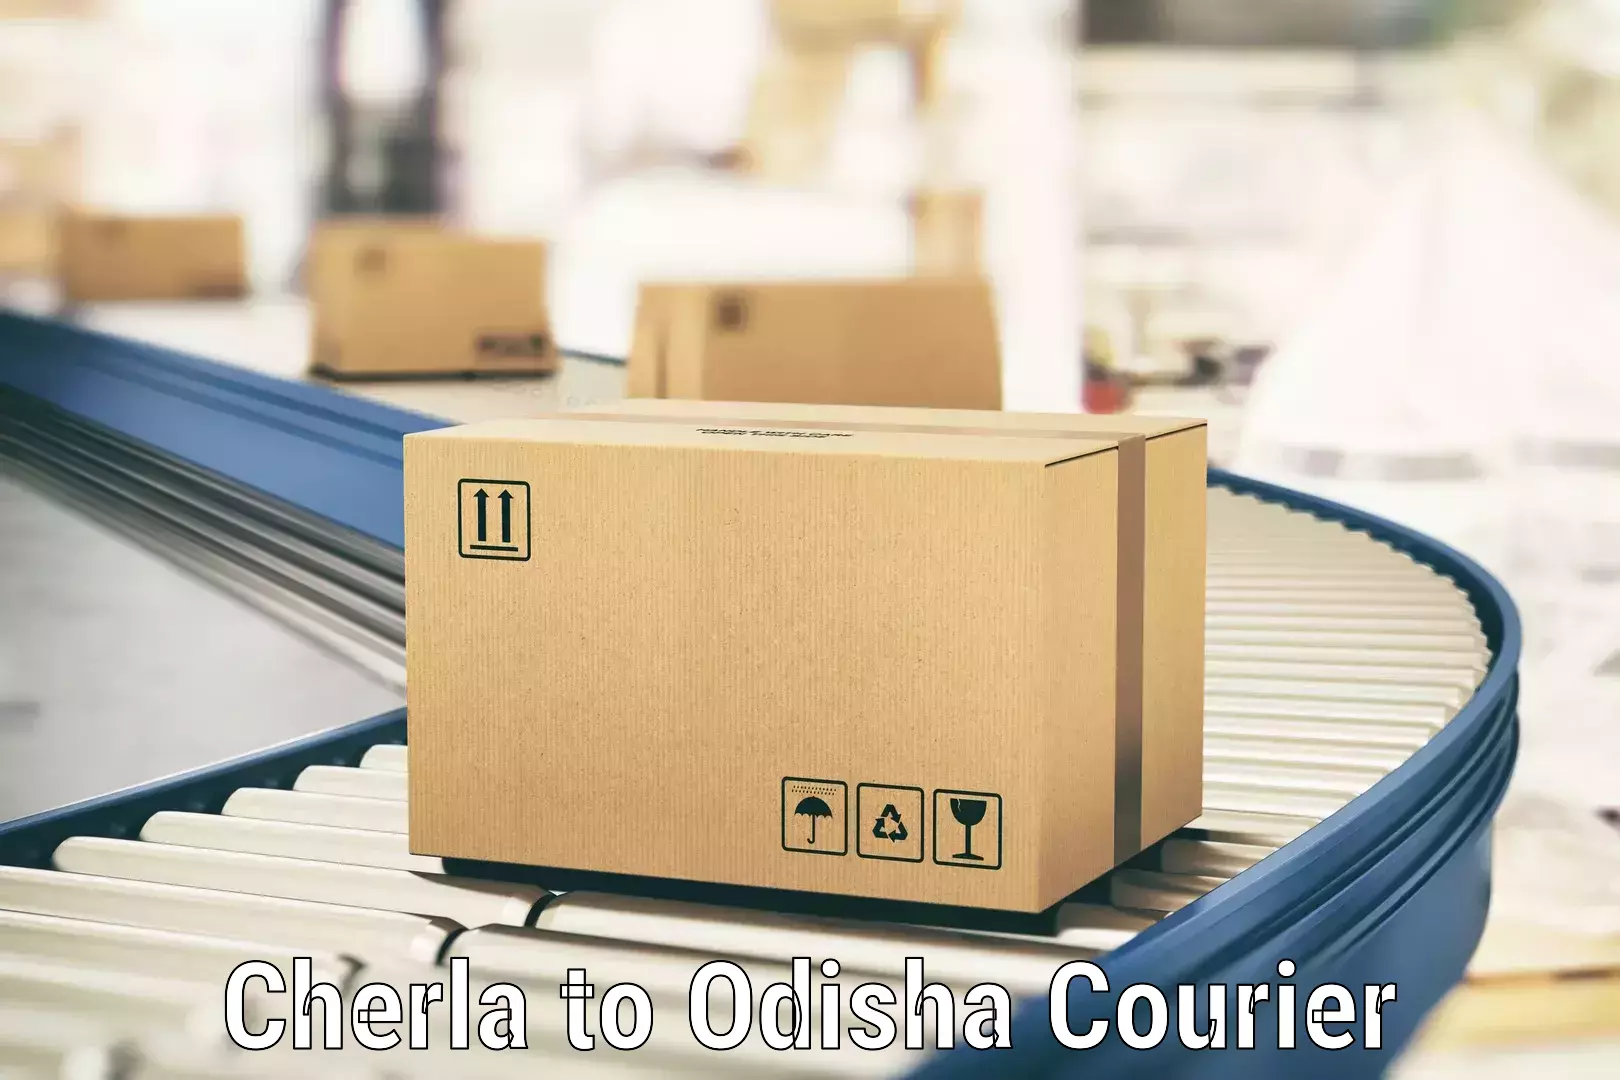 Cost-effective courier options Cherla to Kesinga